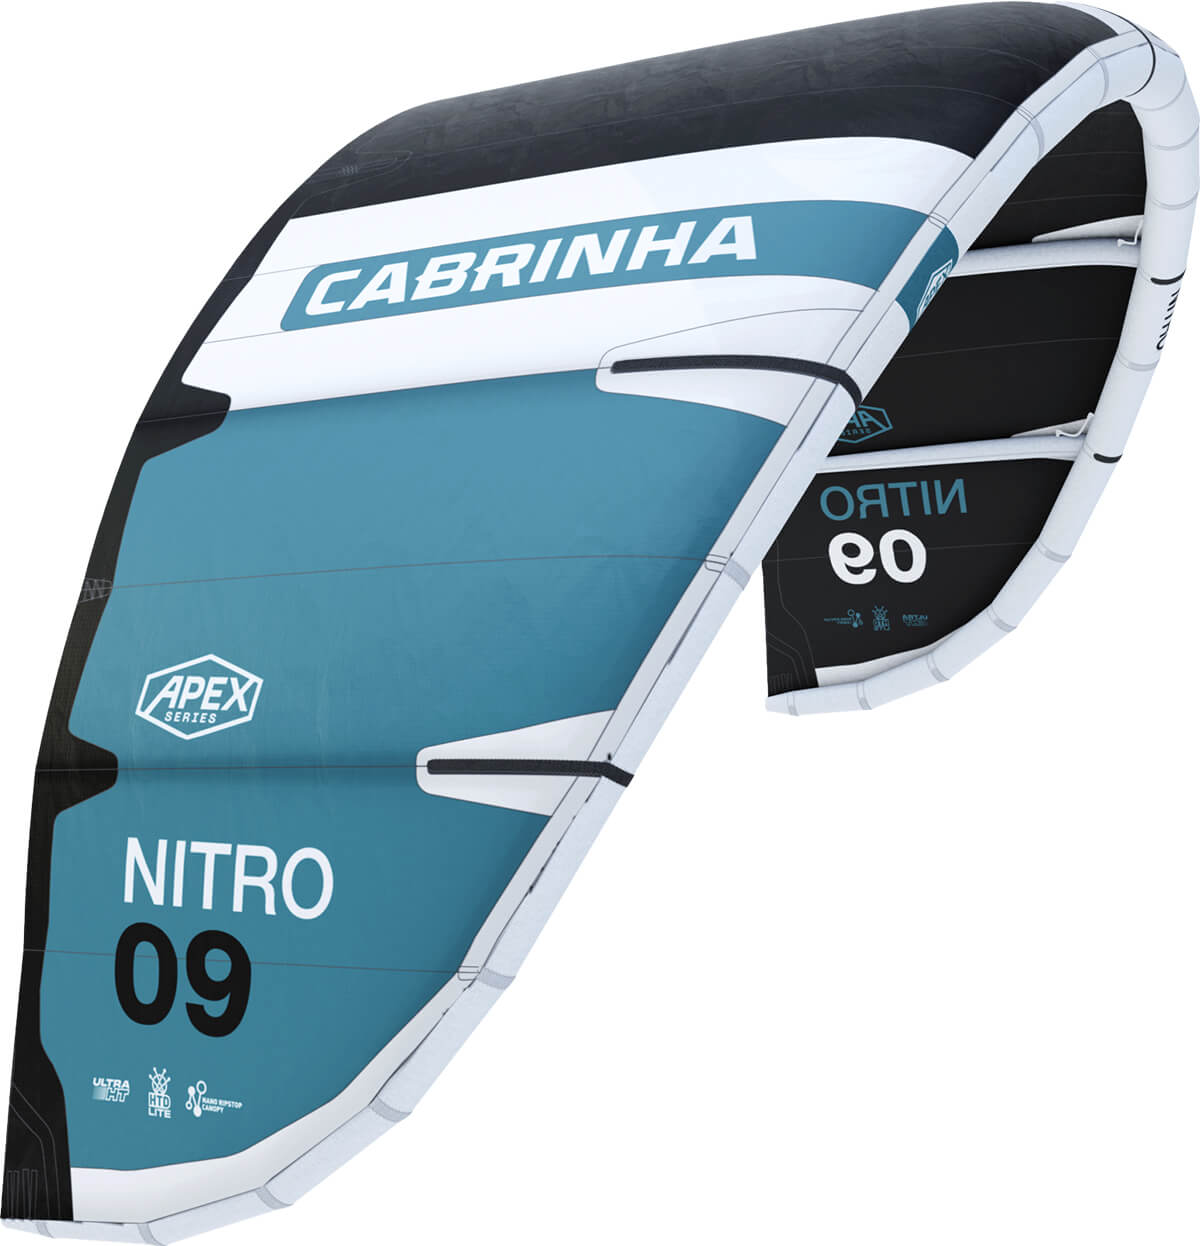 04S Nitro Apex - The 2024 Cabrinha Nitro Apex